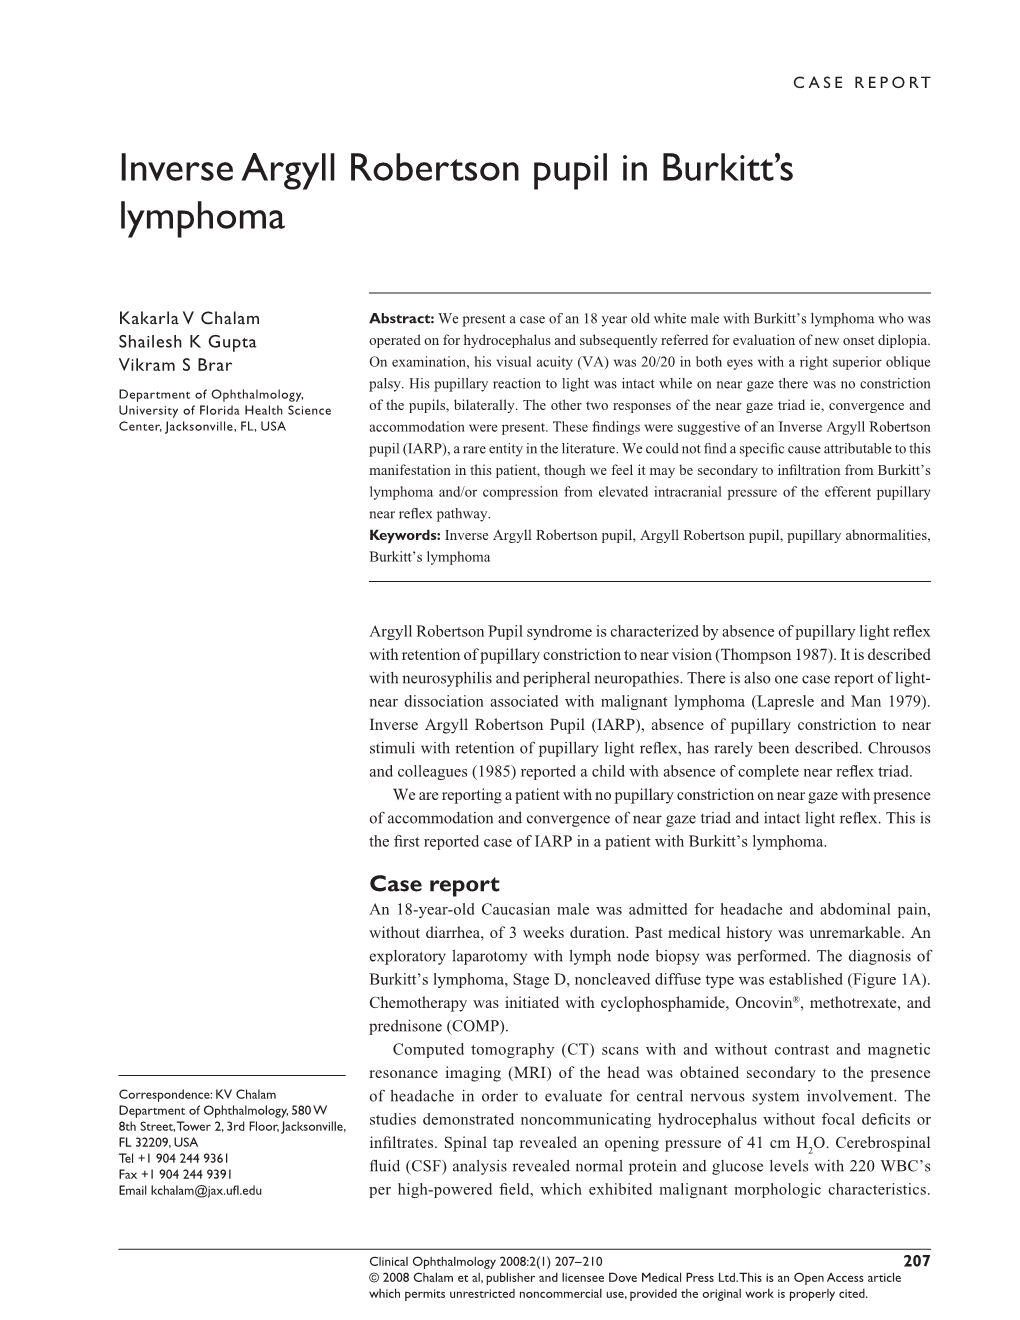 Inverse Argyll Robertson Pupil in Burkitt's Lymphoma